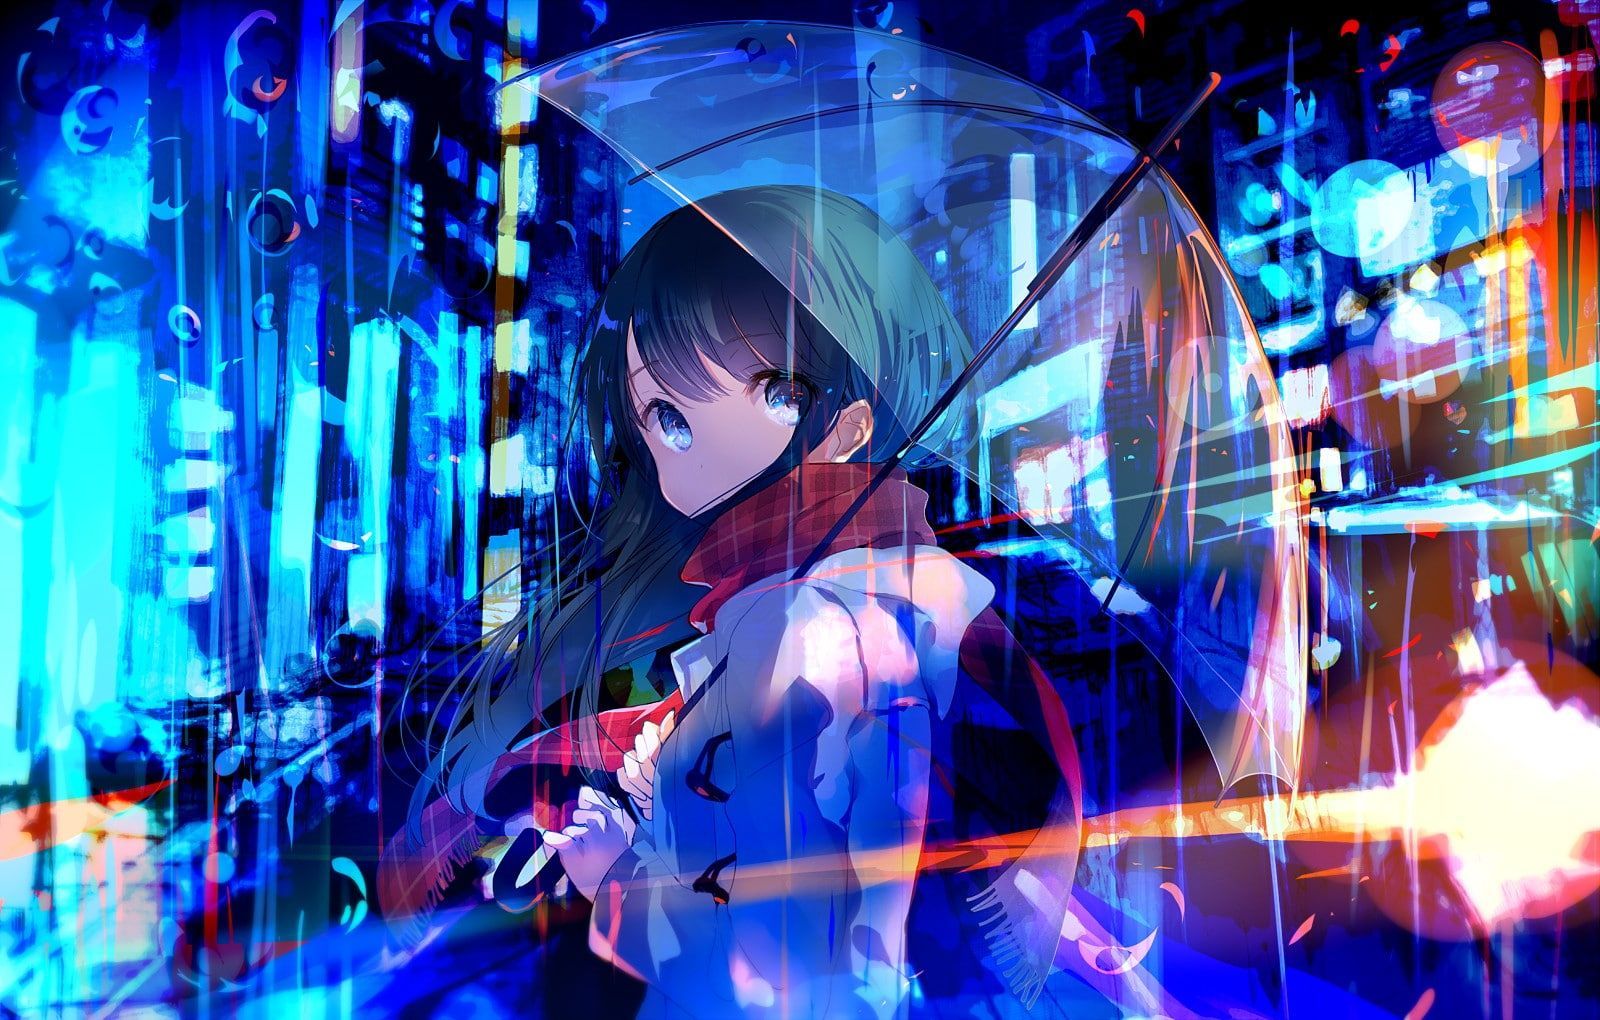 Anime Girls #neon #umbrella P #wallpaper #hdwallpaper #desktop. Anime wallpaper, Cool anime wallpaper, Anime